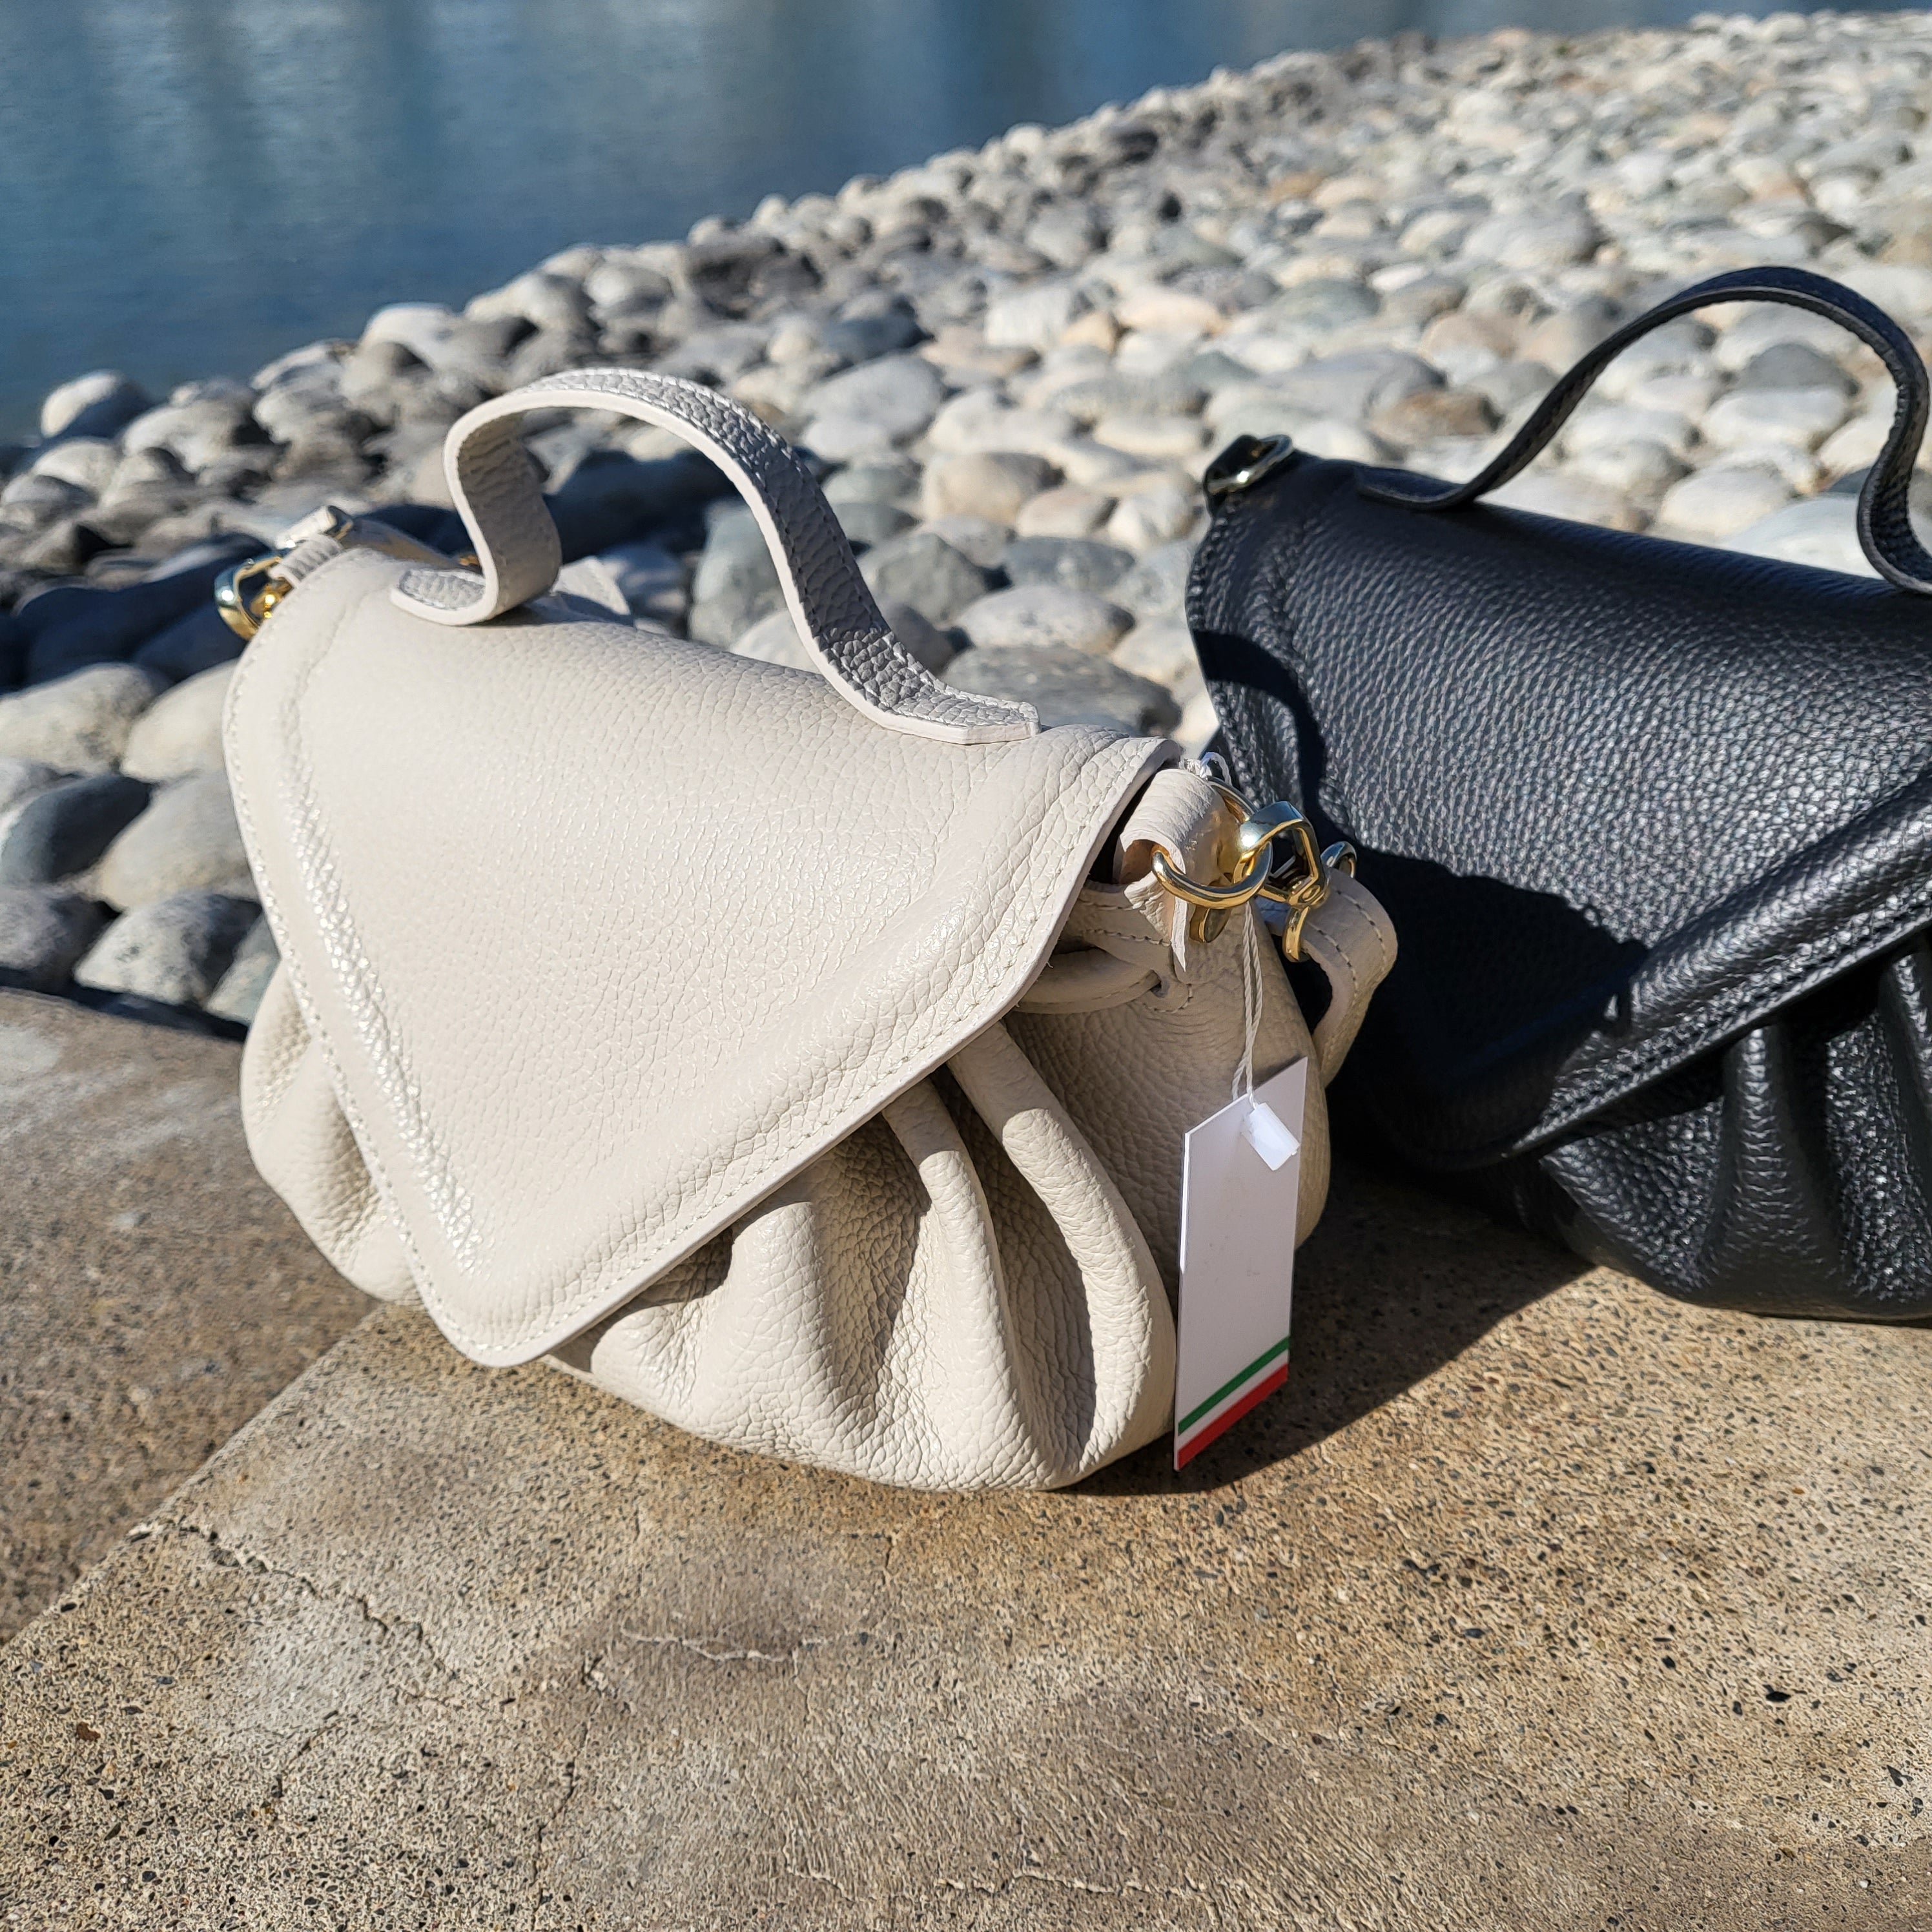 Carro Positano Italian leather woven clutch bag